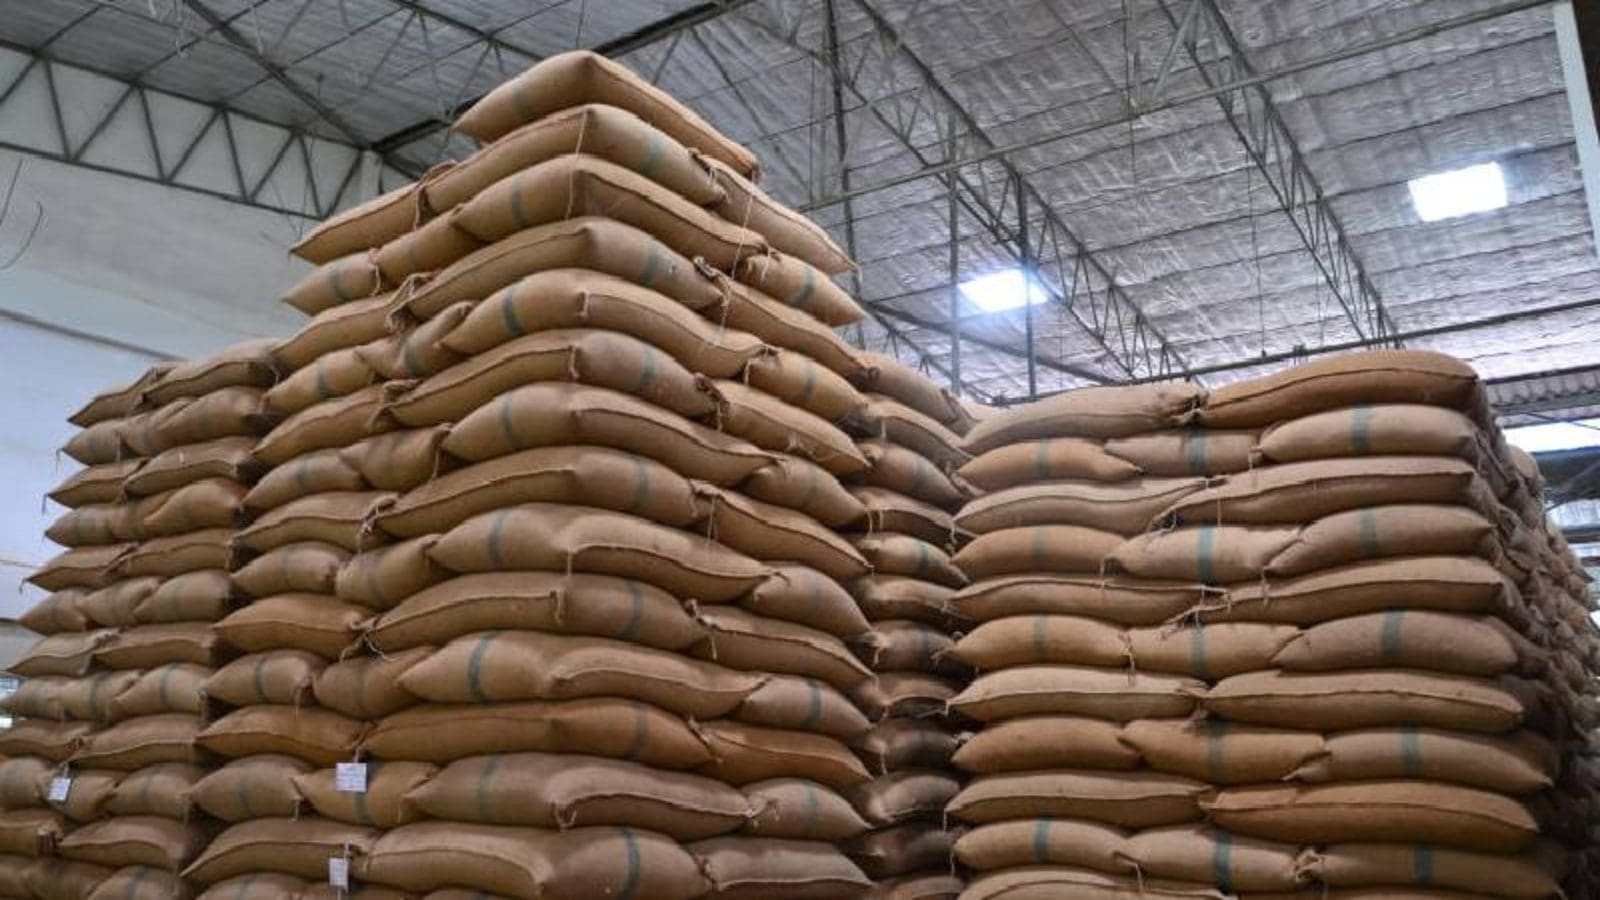 Kenya commissions grain storage facilities in Nakuru county to curb post-harvest losses